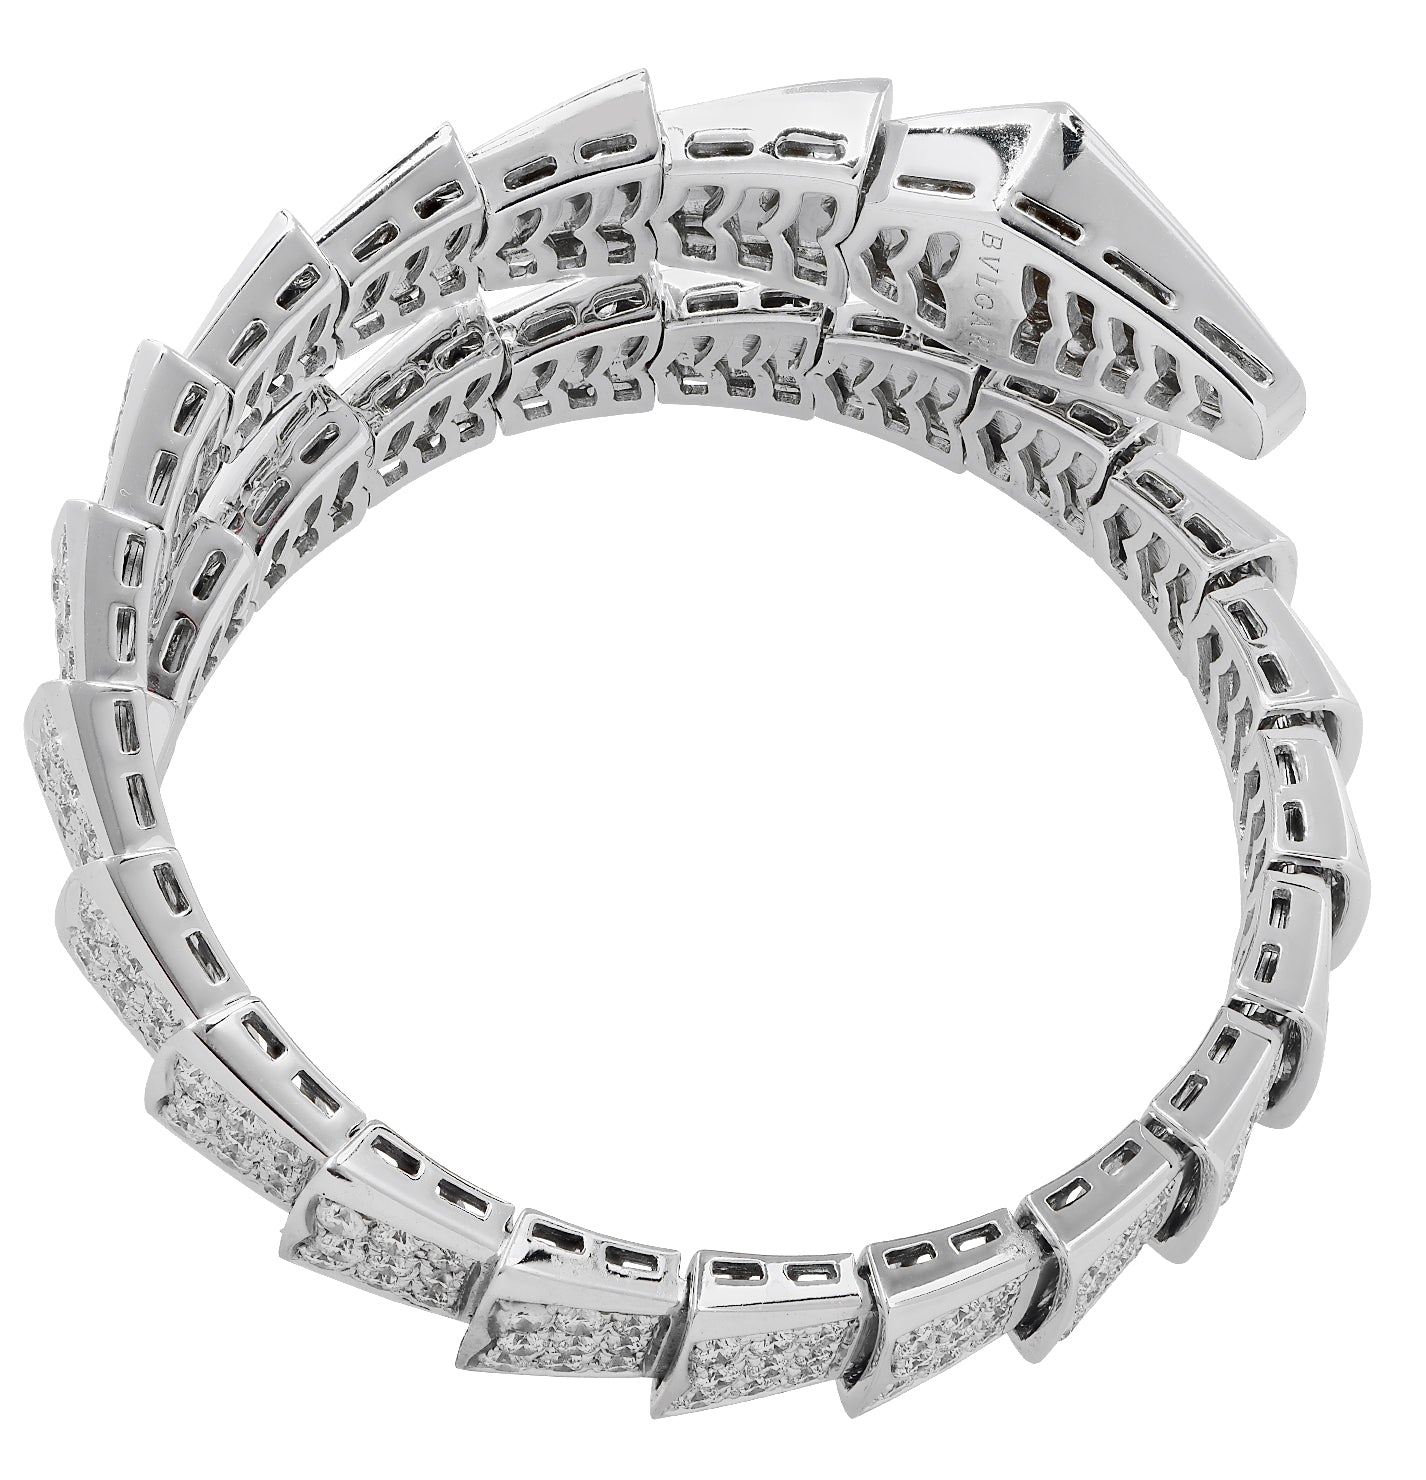 Bvlgari Serpenti Bracelet in 18K White Gold with Sapphire Eyes and Diamonds